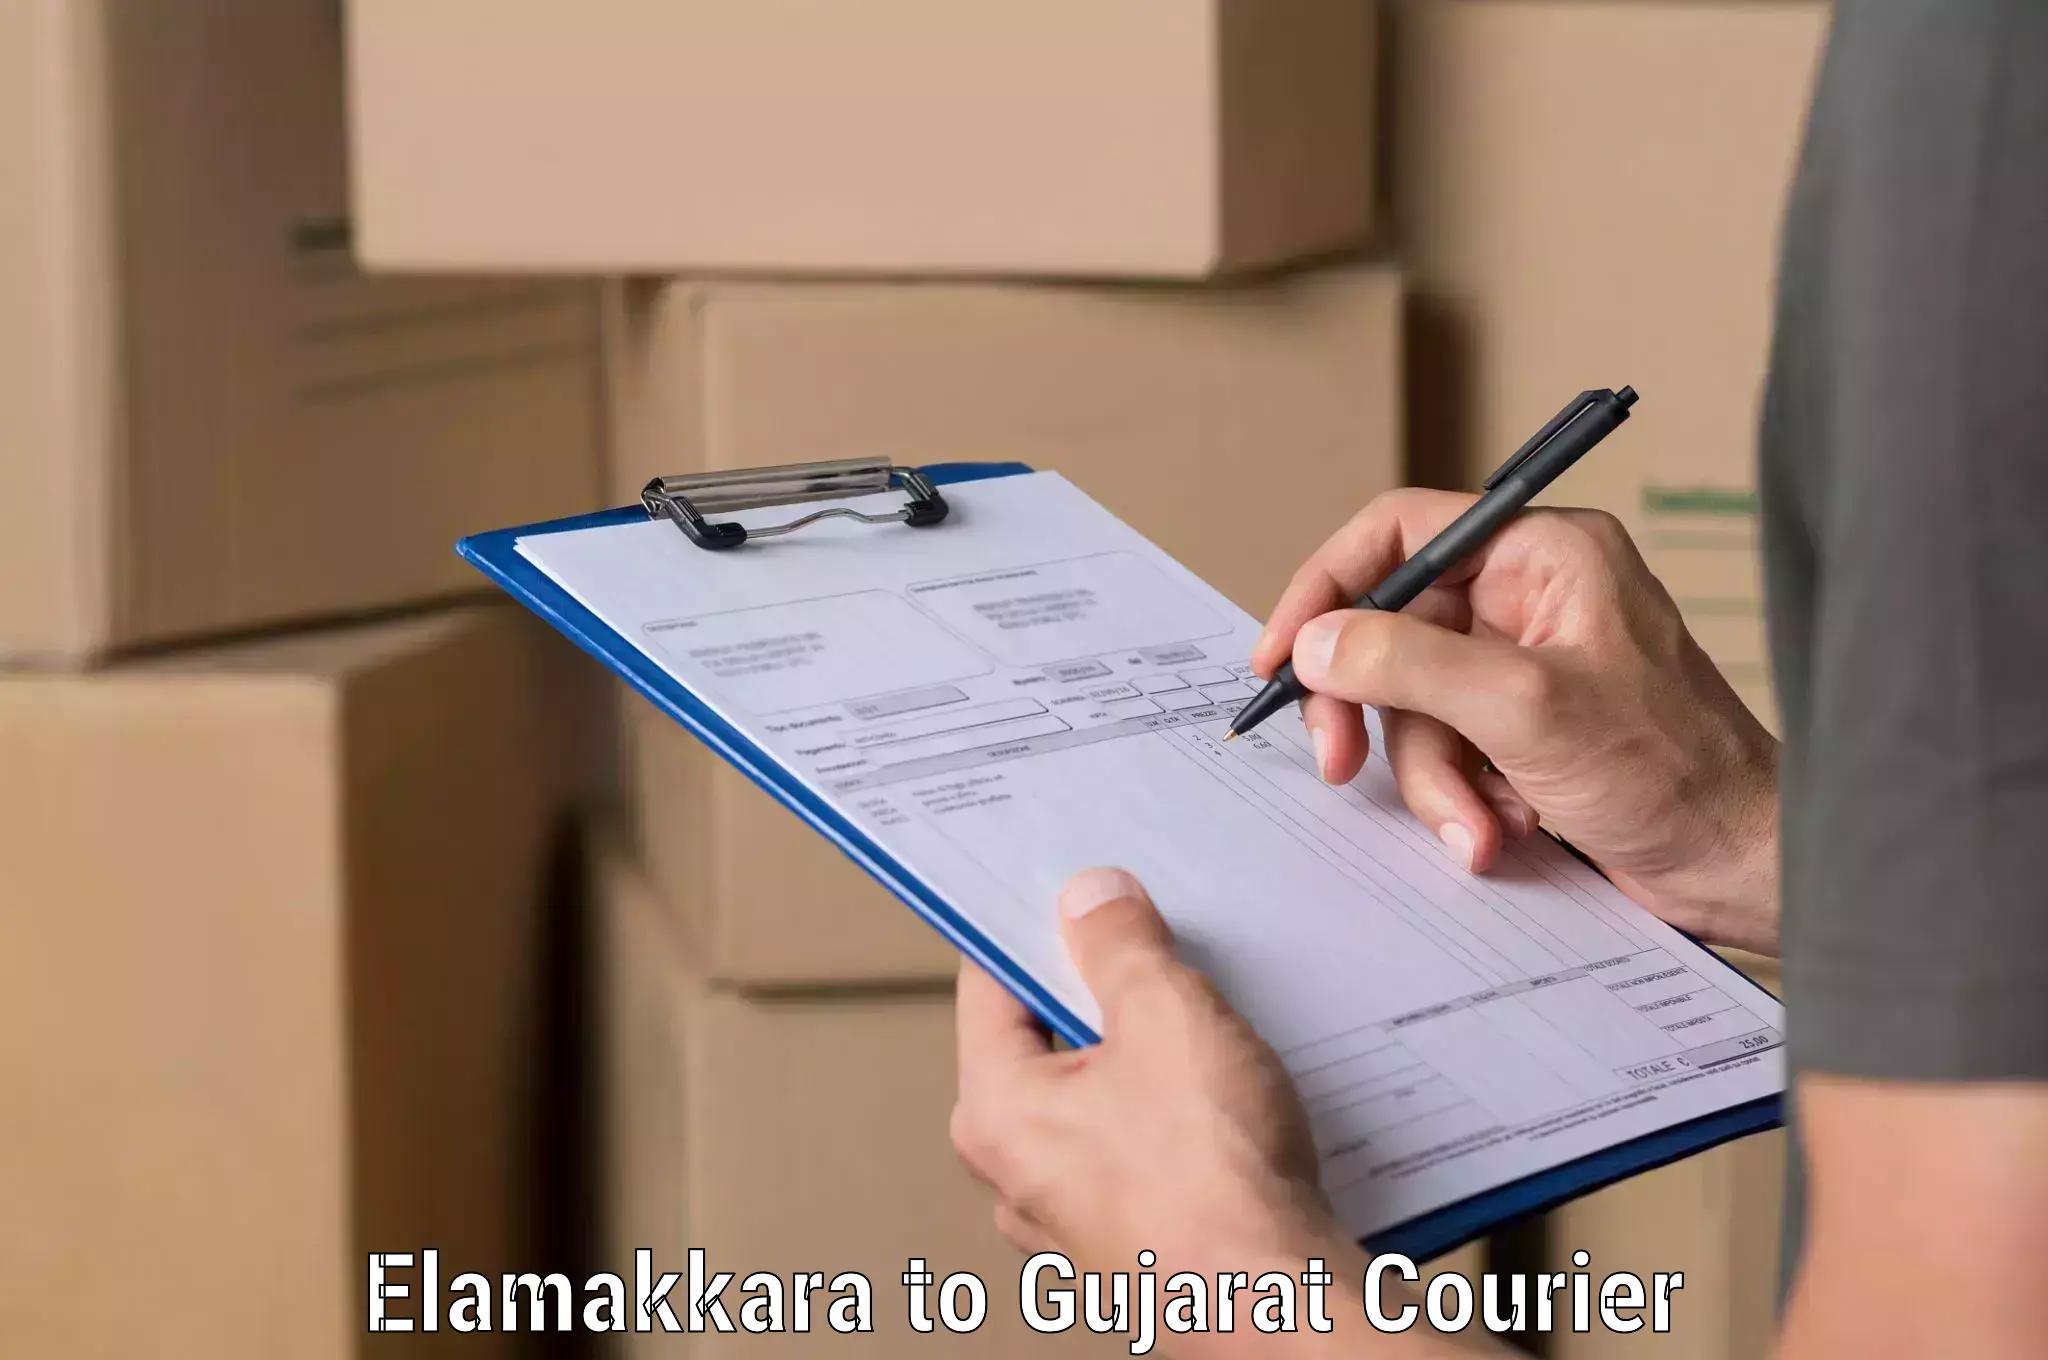 Logistics service provider Elamakkara to Matar